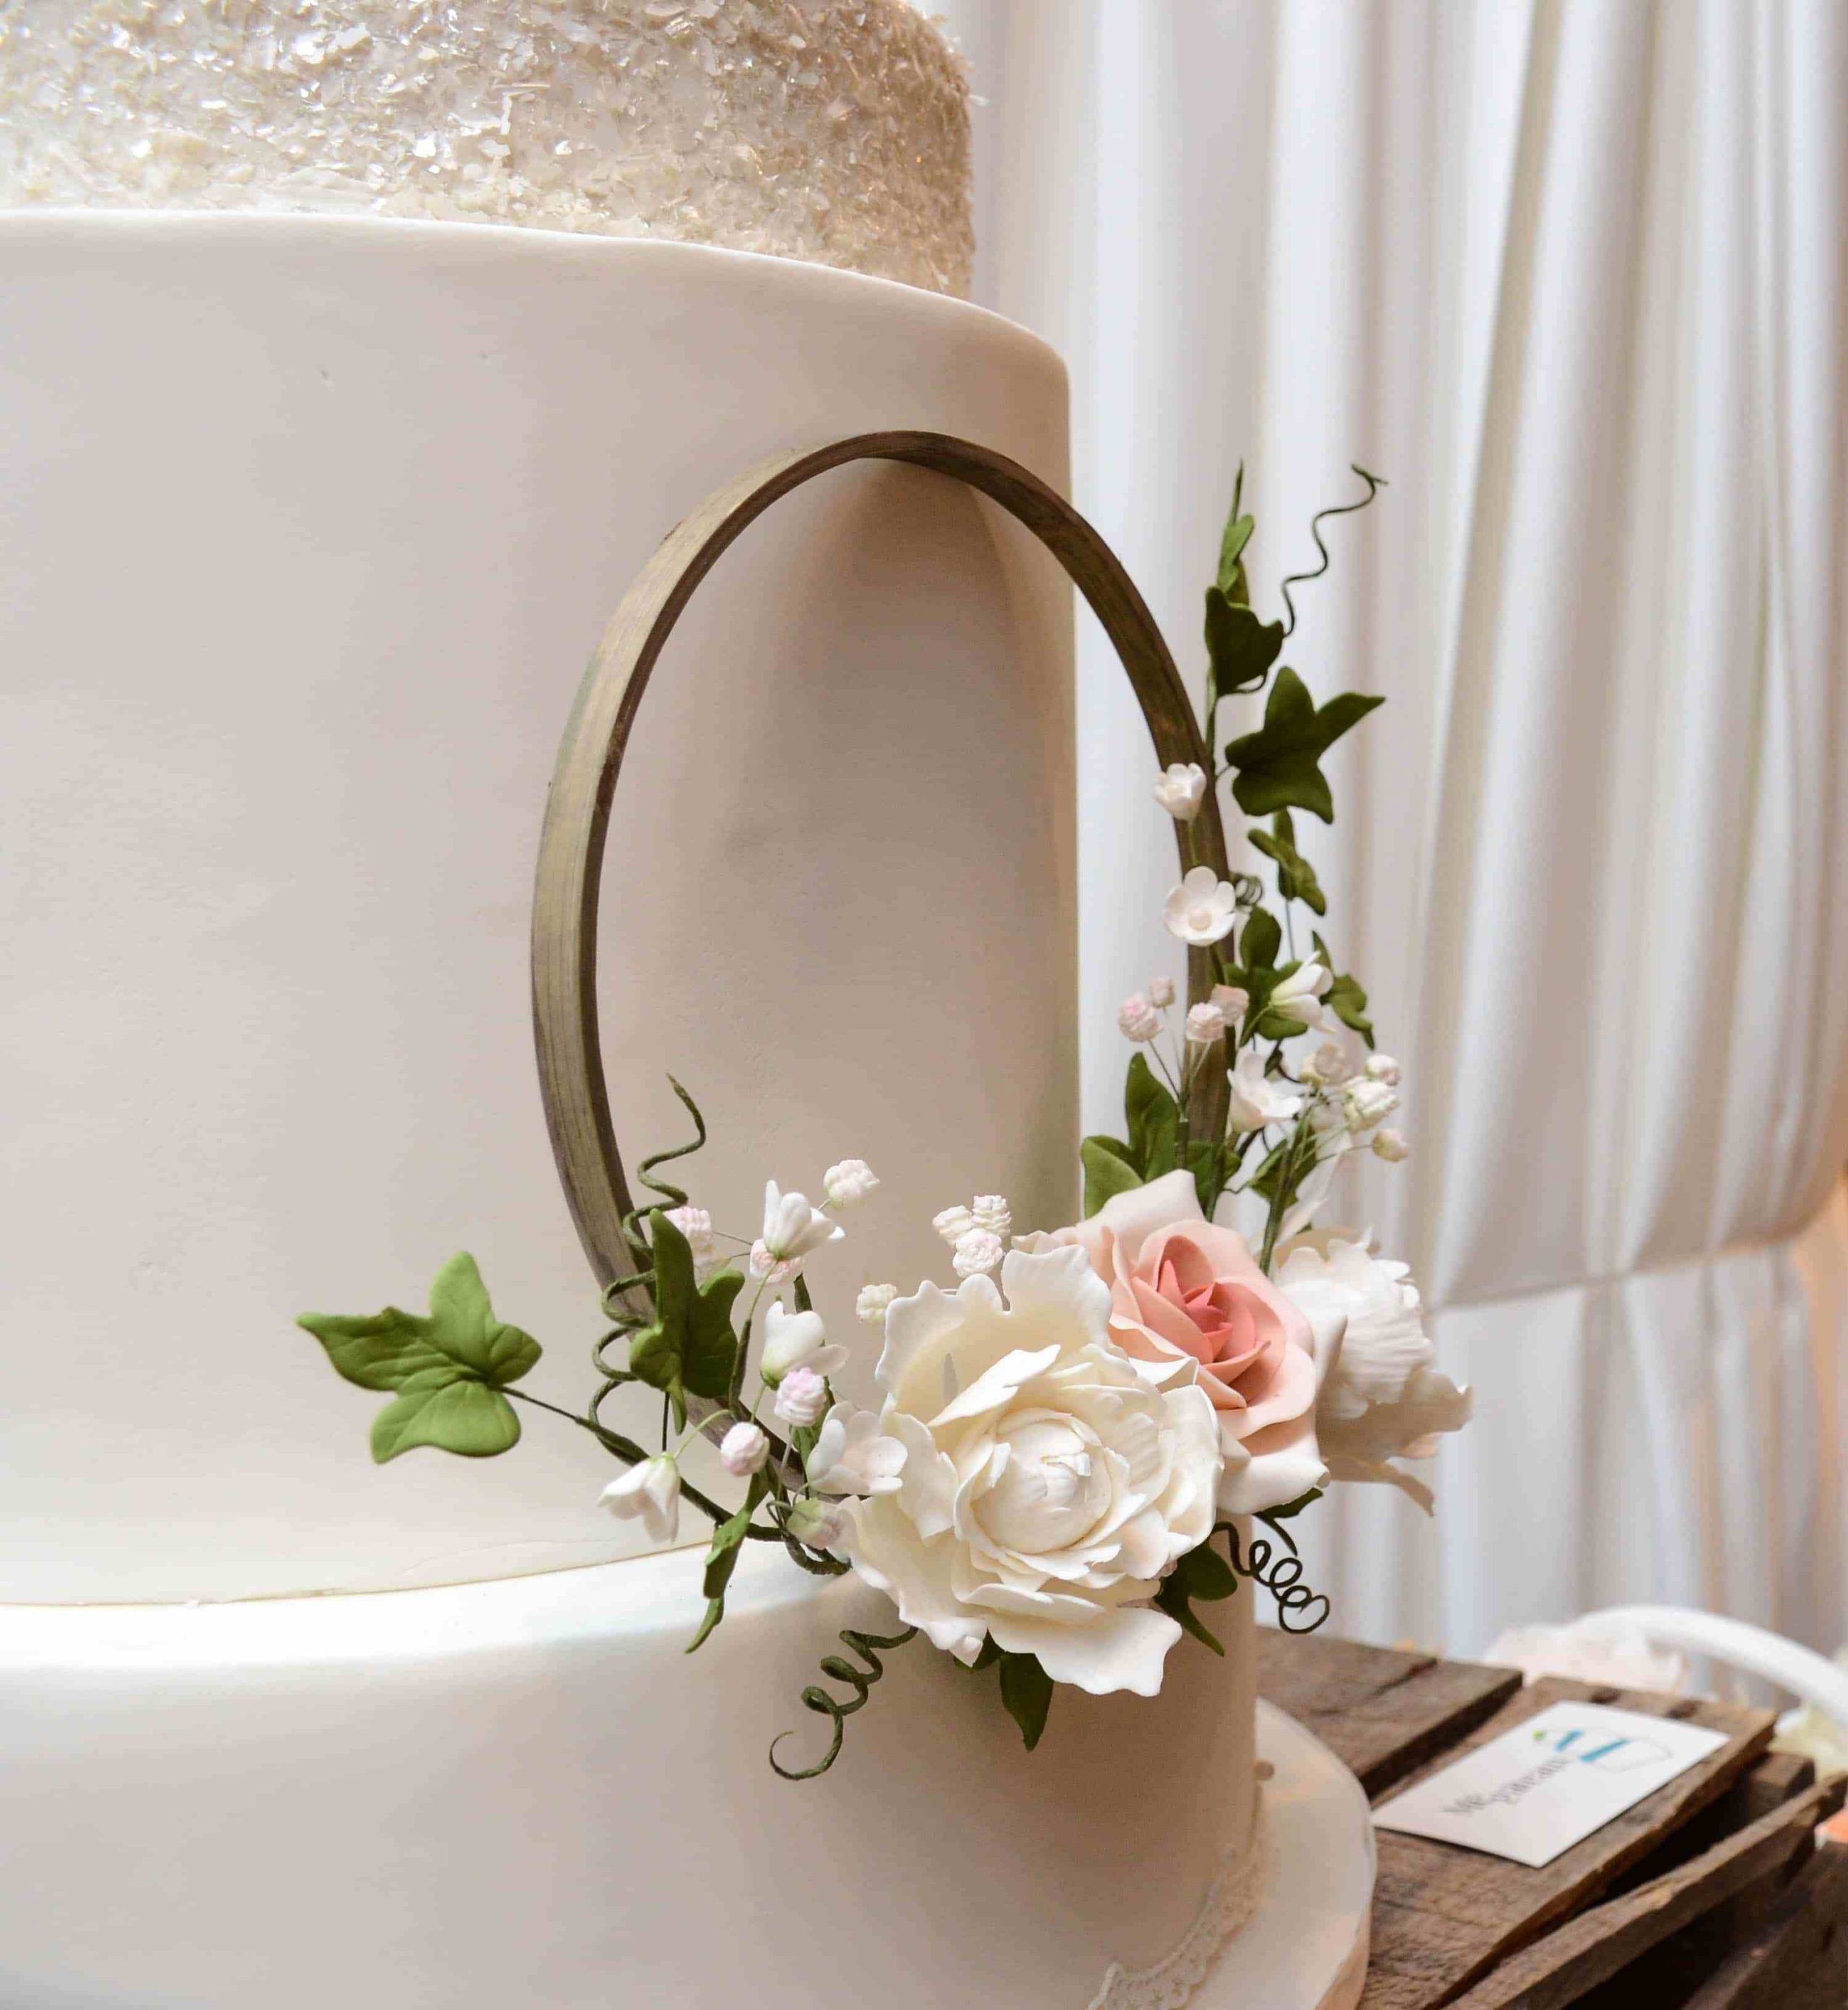 trends-cakes-wedding-flowers-hoop-cabane-sucre-constantin